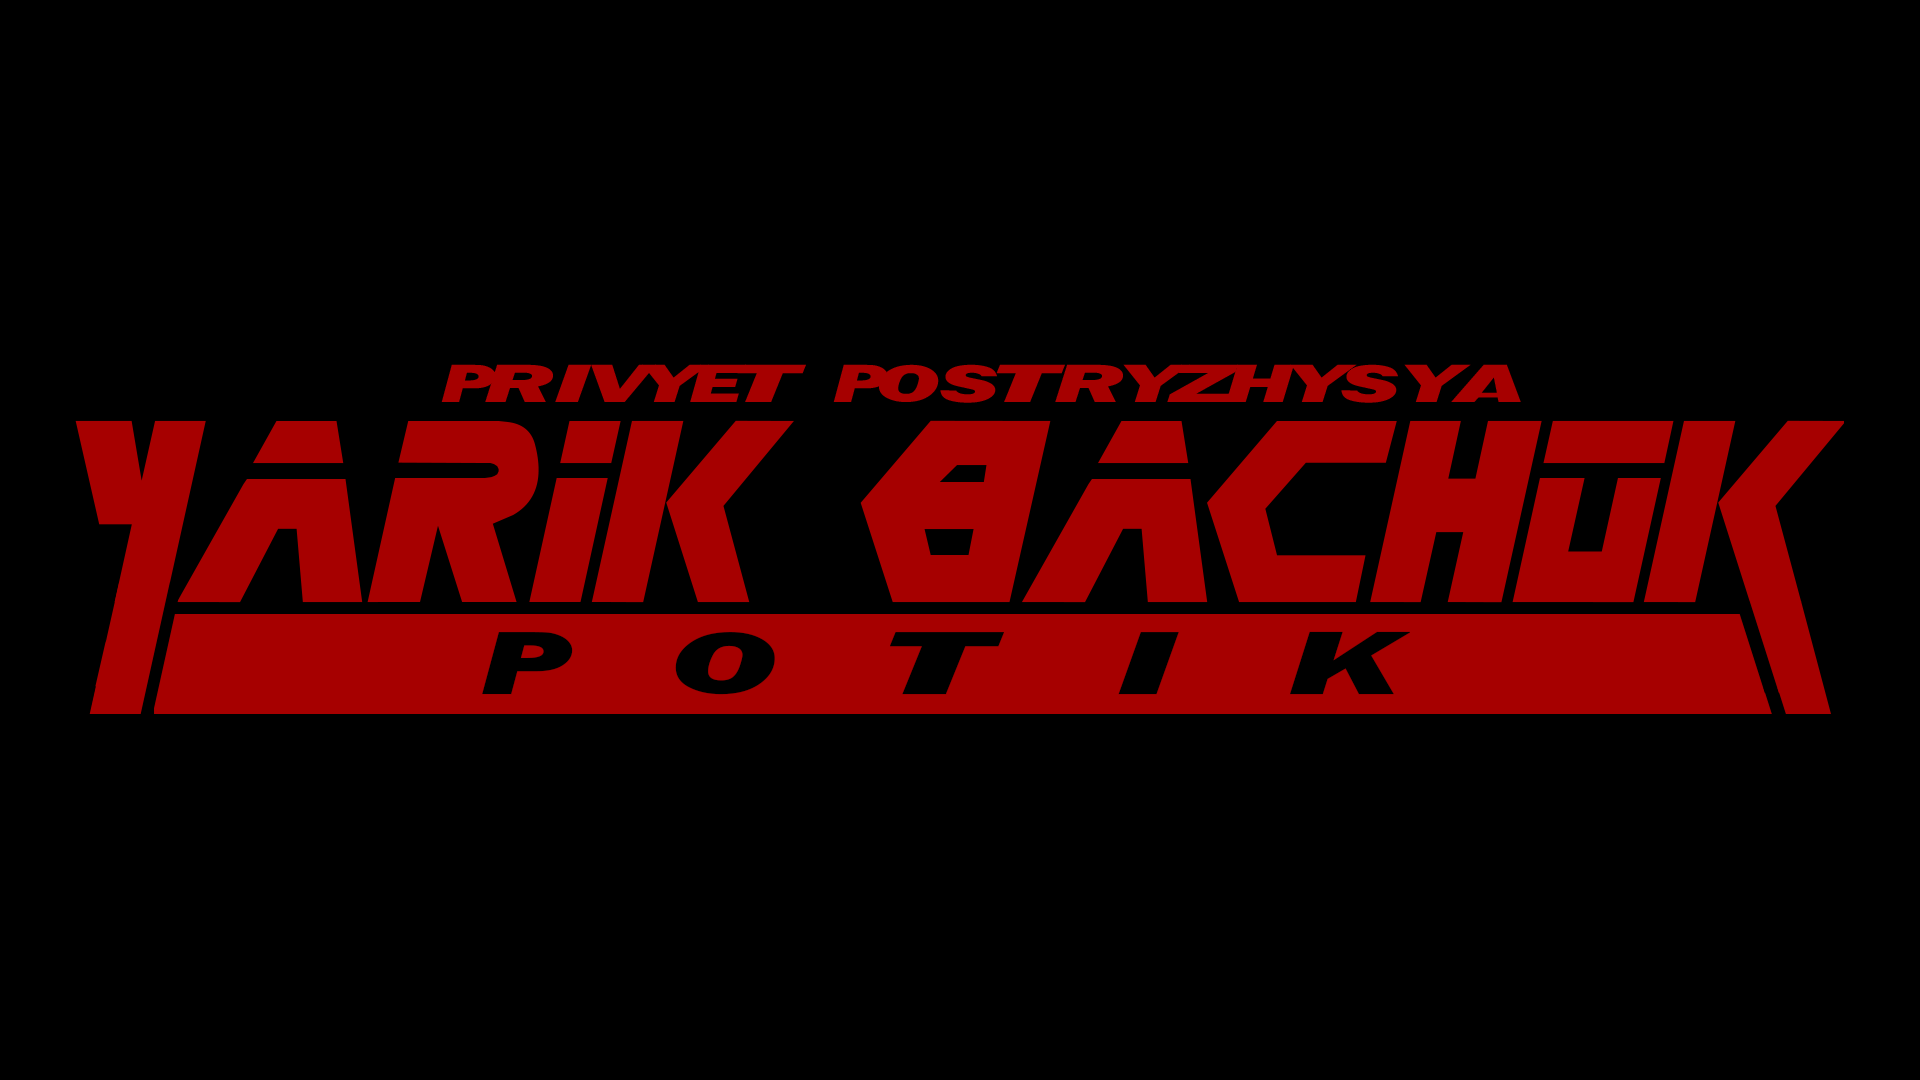 General 1920x1080 minimalism Ukrainian memes text black background red